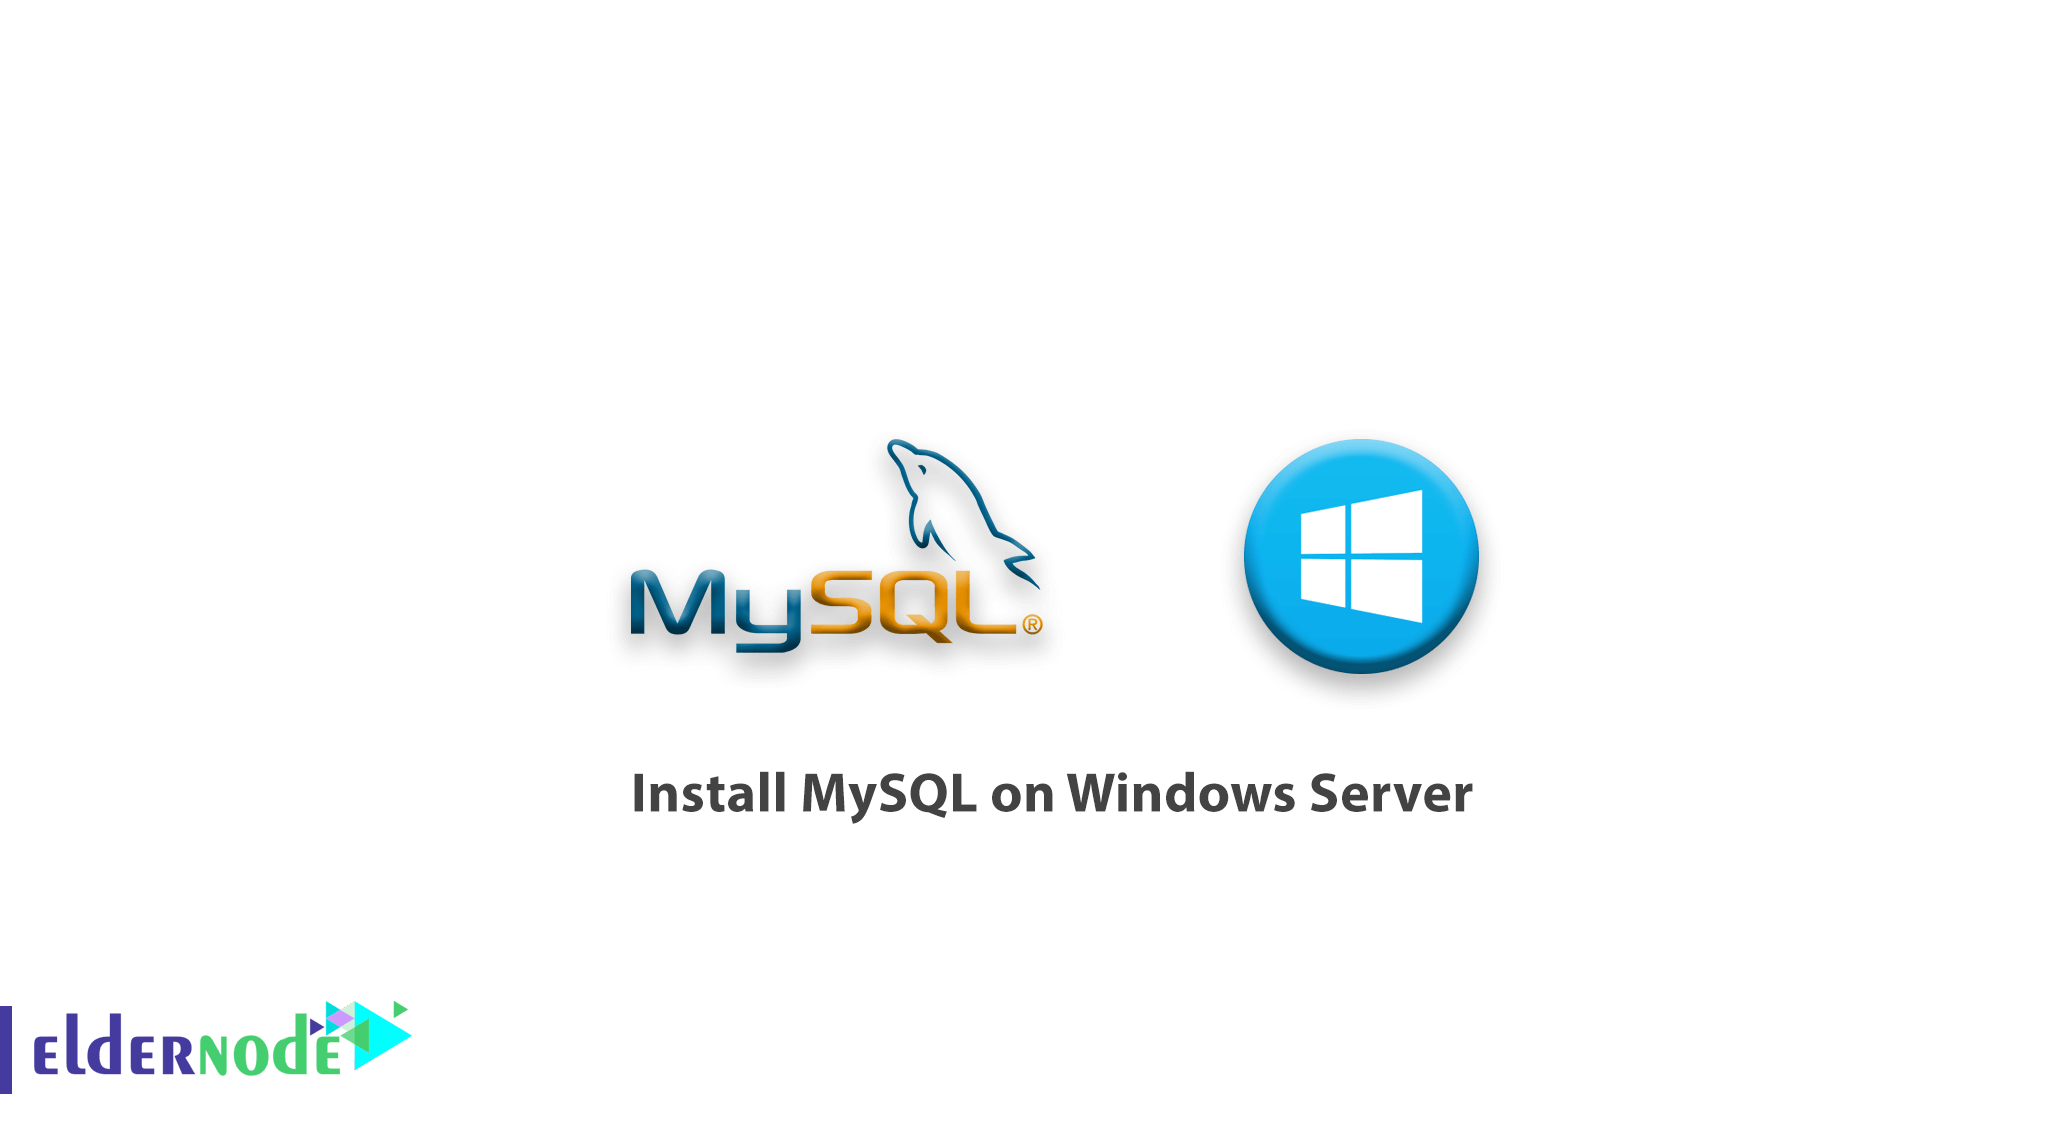 mysql server 5.5 download for windows 7